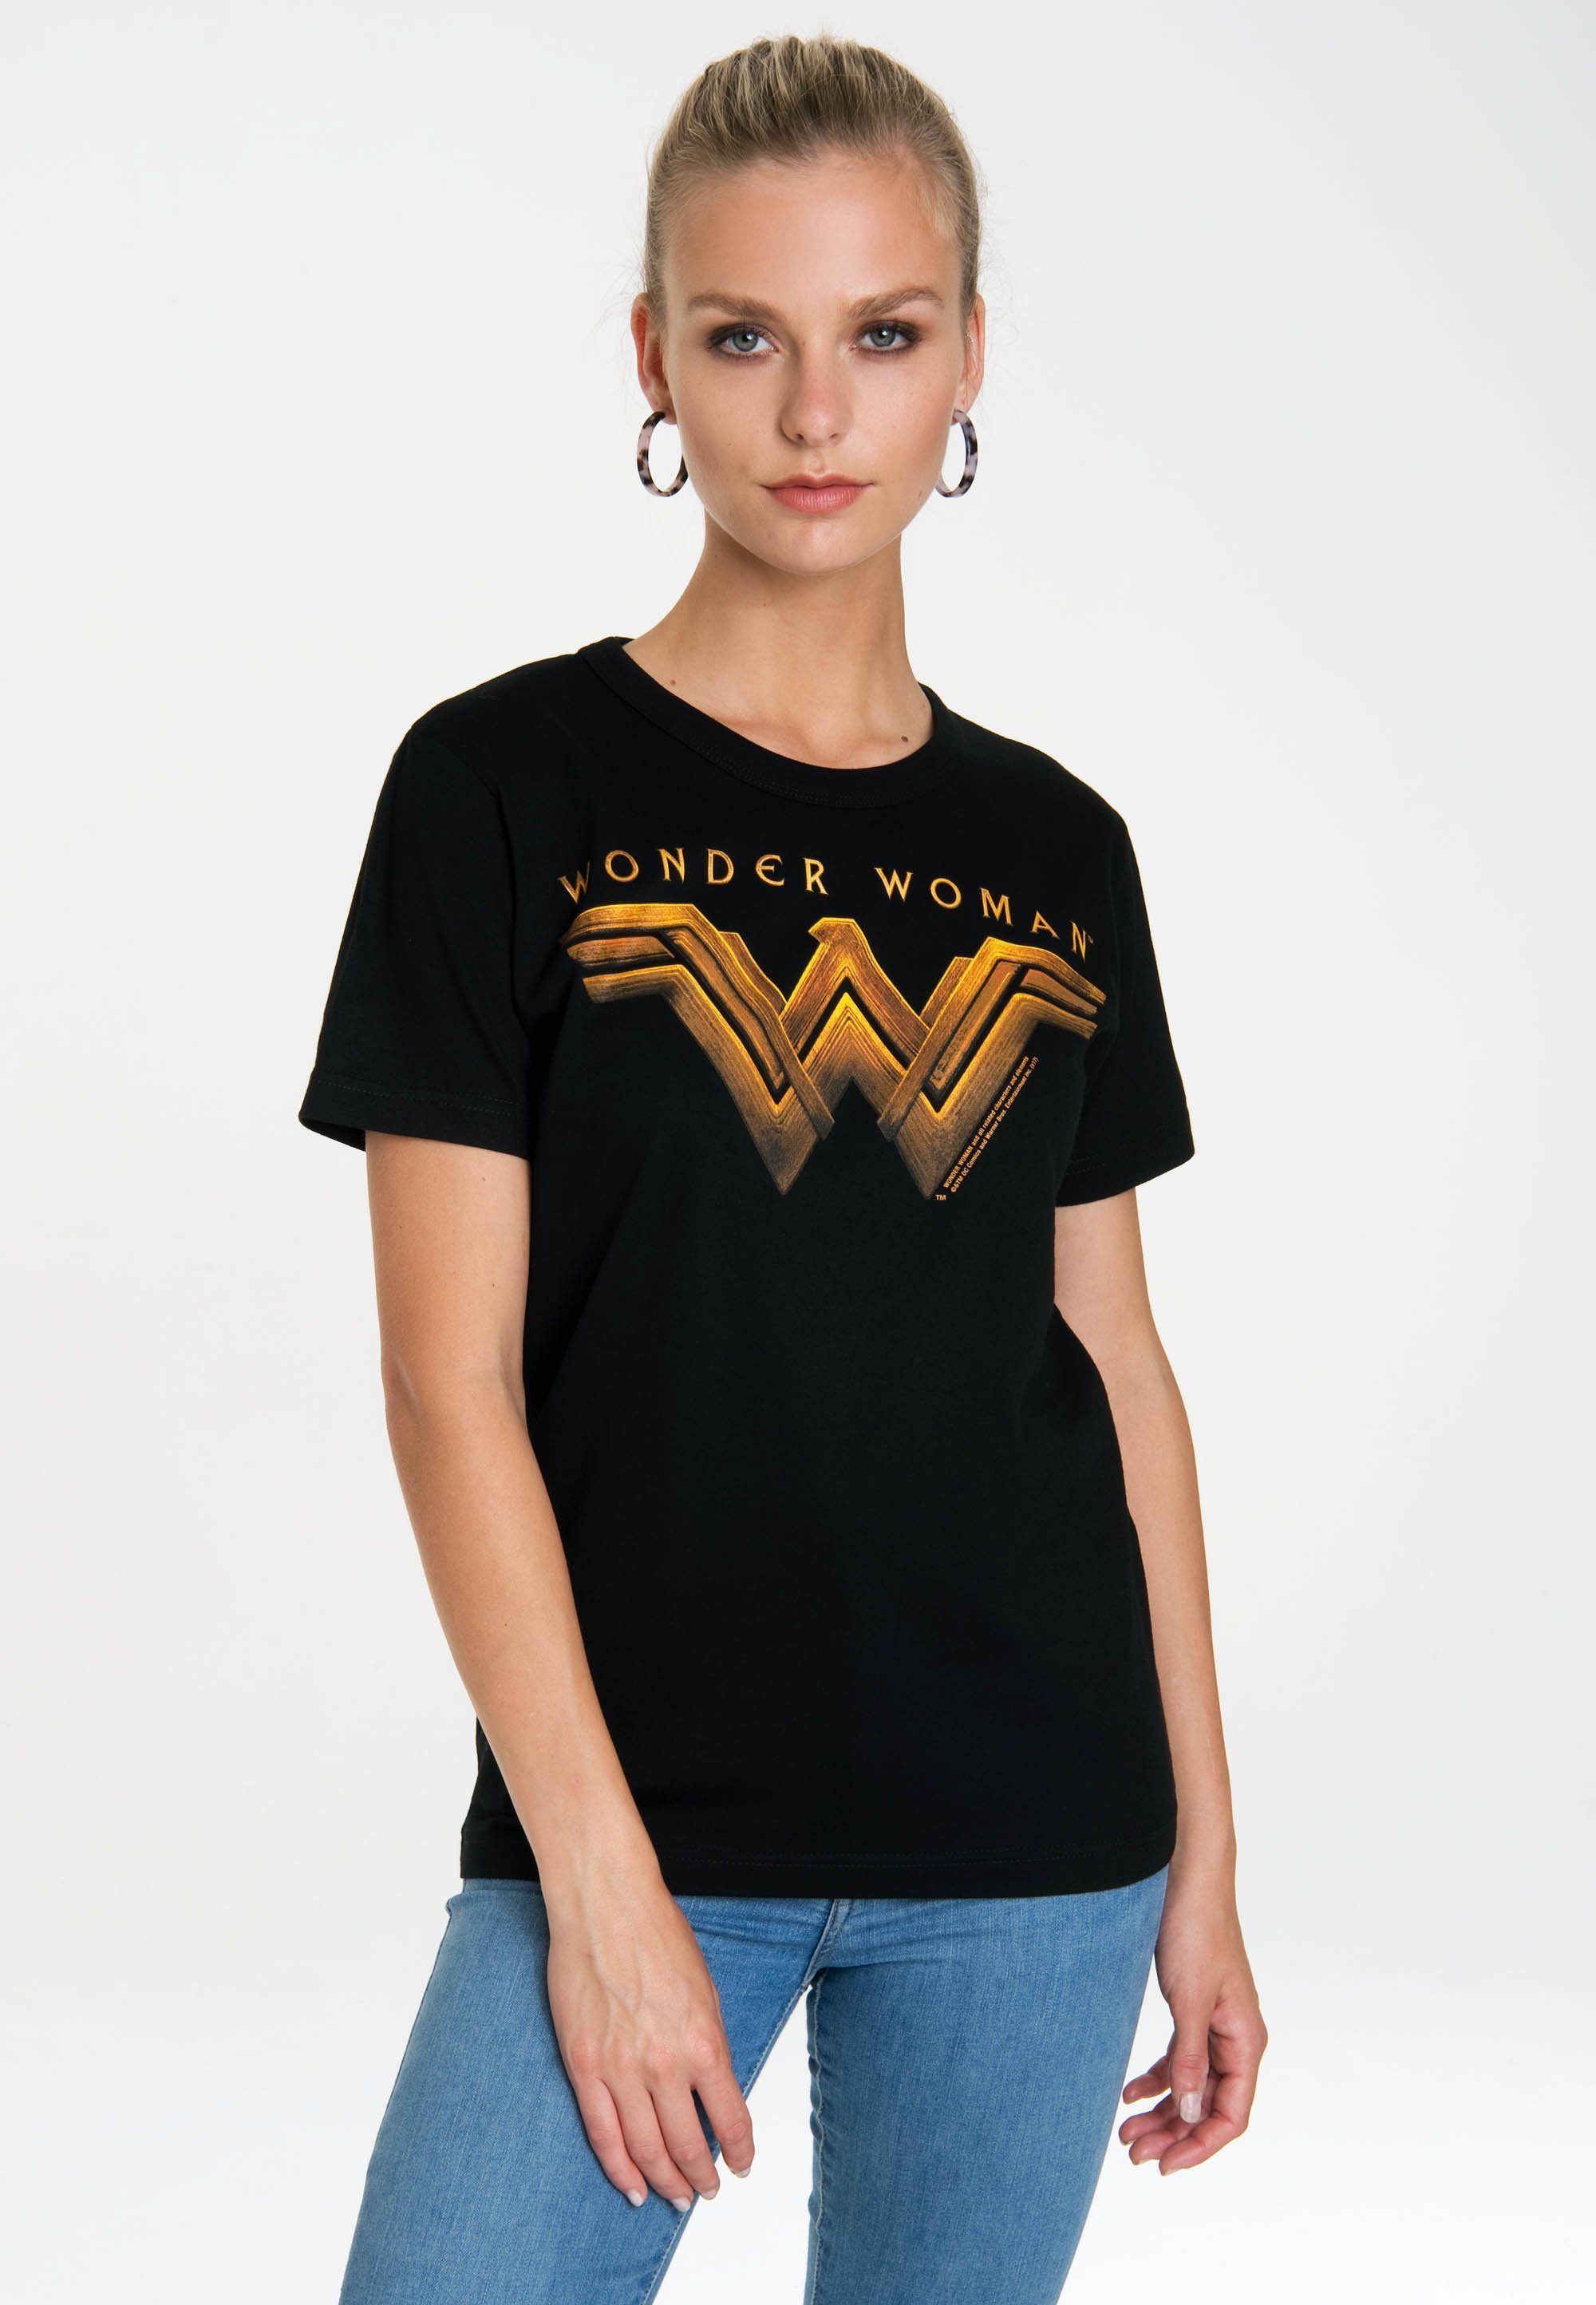 LOGOSHIRT T-Shirt Wonder Woman Movie mit lizenziertem Wonder Woman -Frontprint